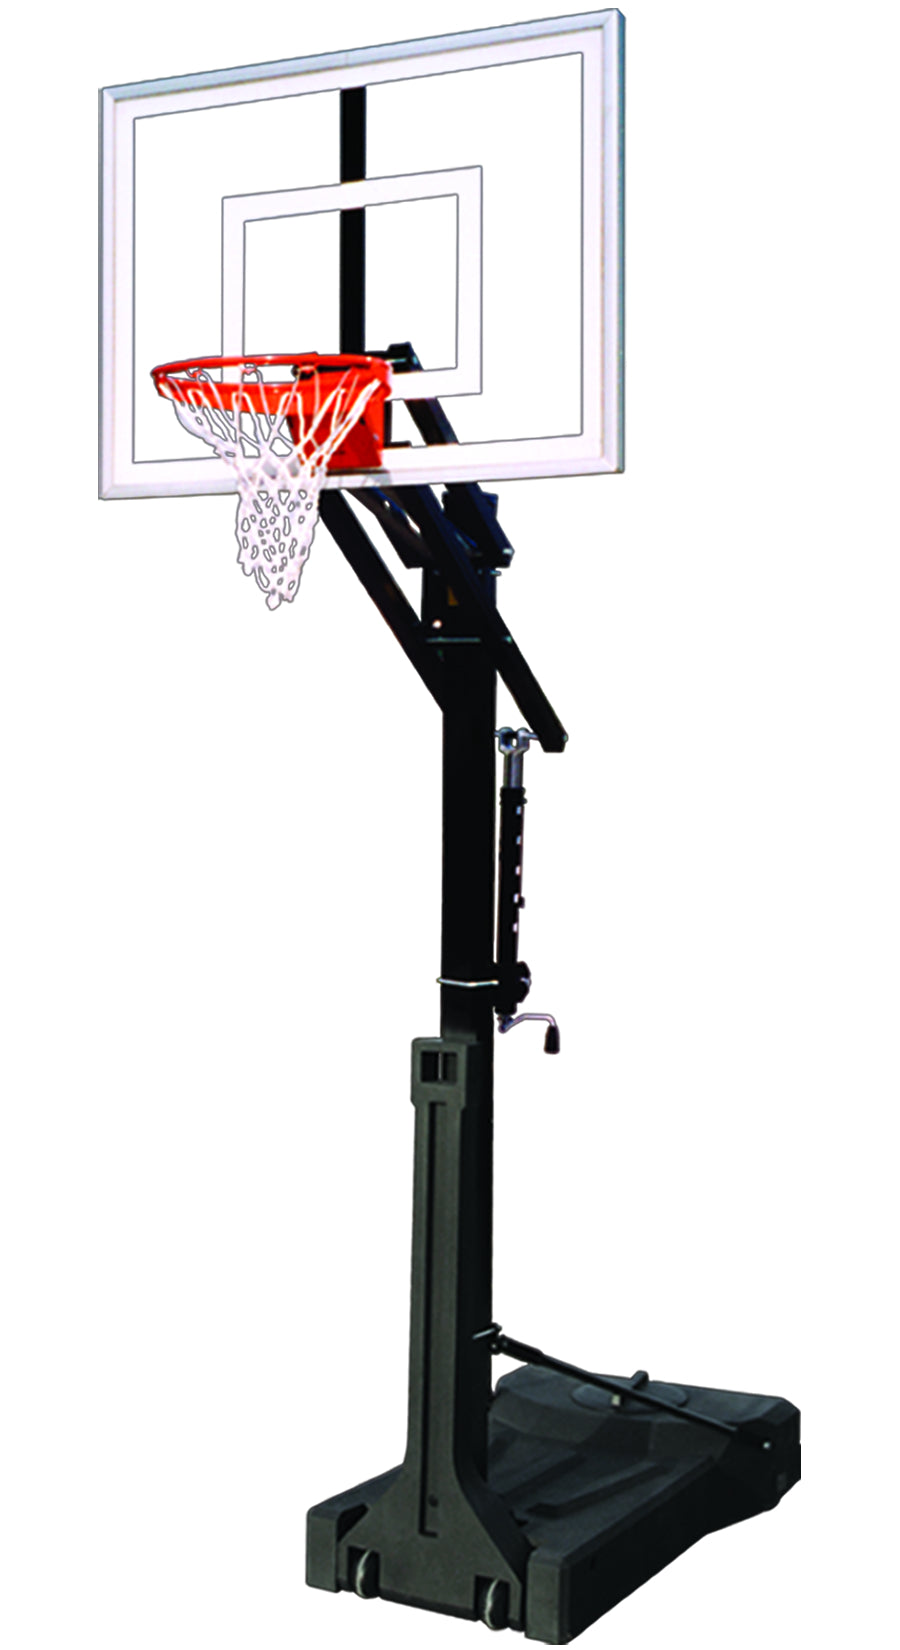 First Team OmniJam Turbo Portable Basketball Goal - 36"x54" Tempered Glass